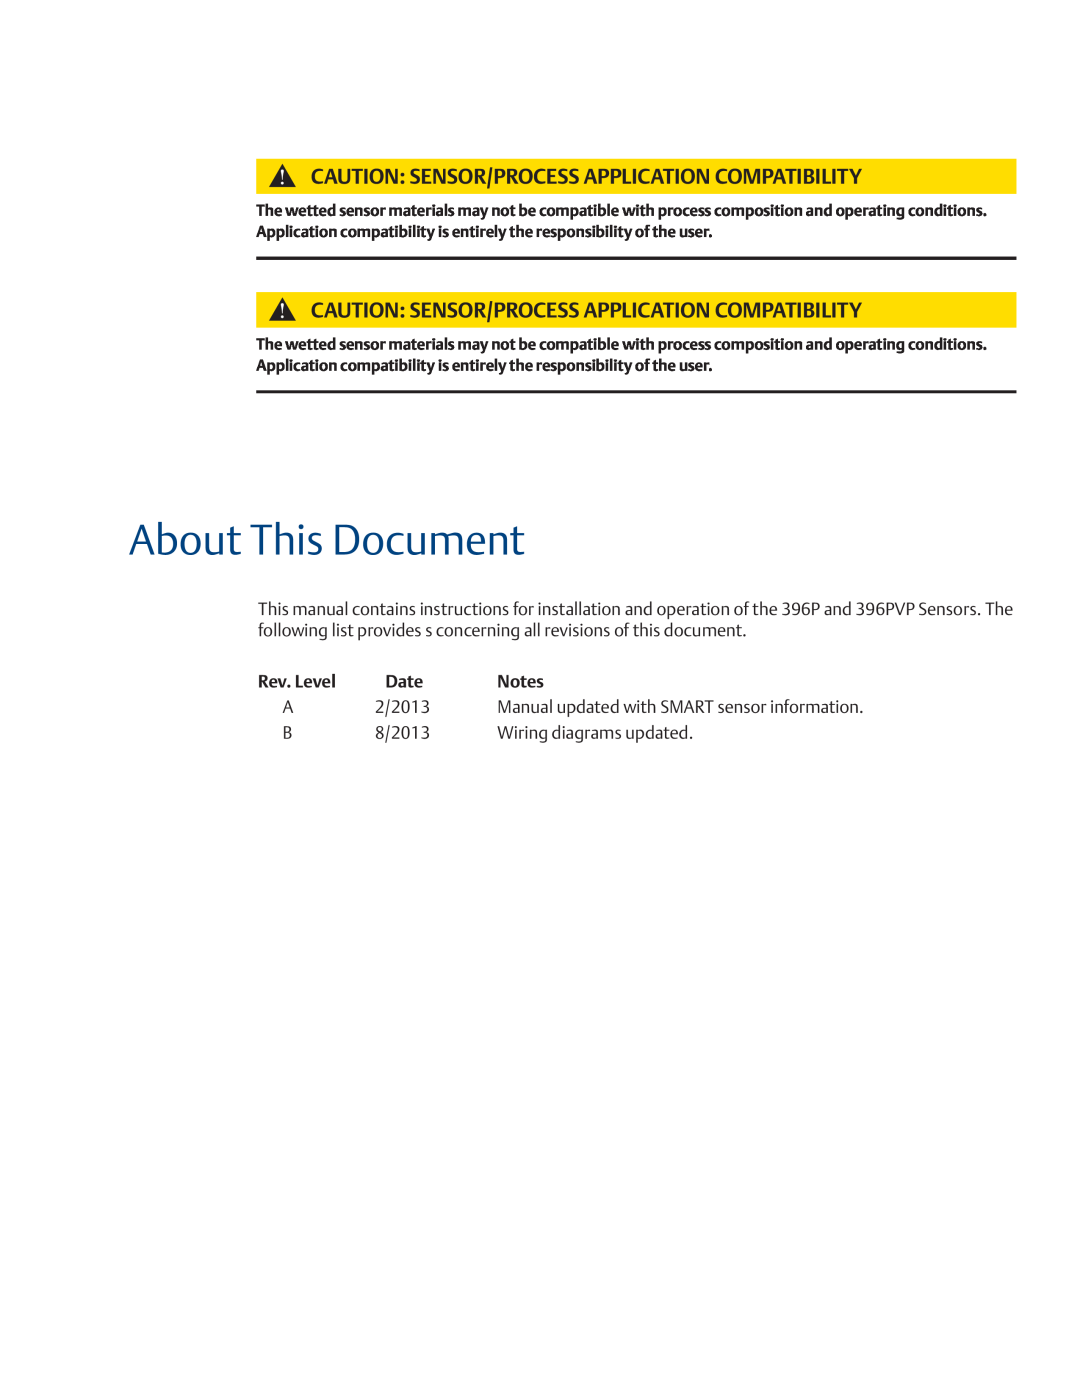 Emerson 396PVP About This Document, Rev. Level, Date, Notes, Caution: Sensor/Process Application Compatibility 